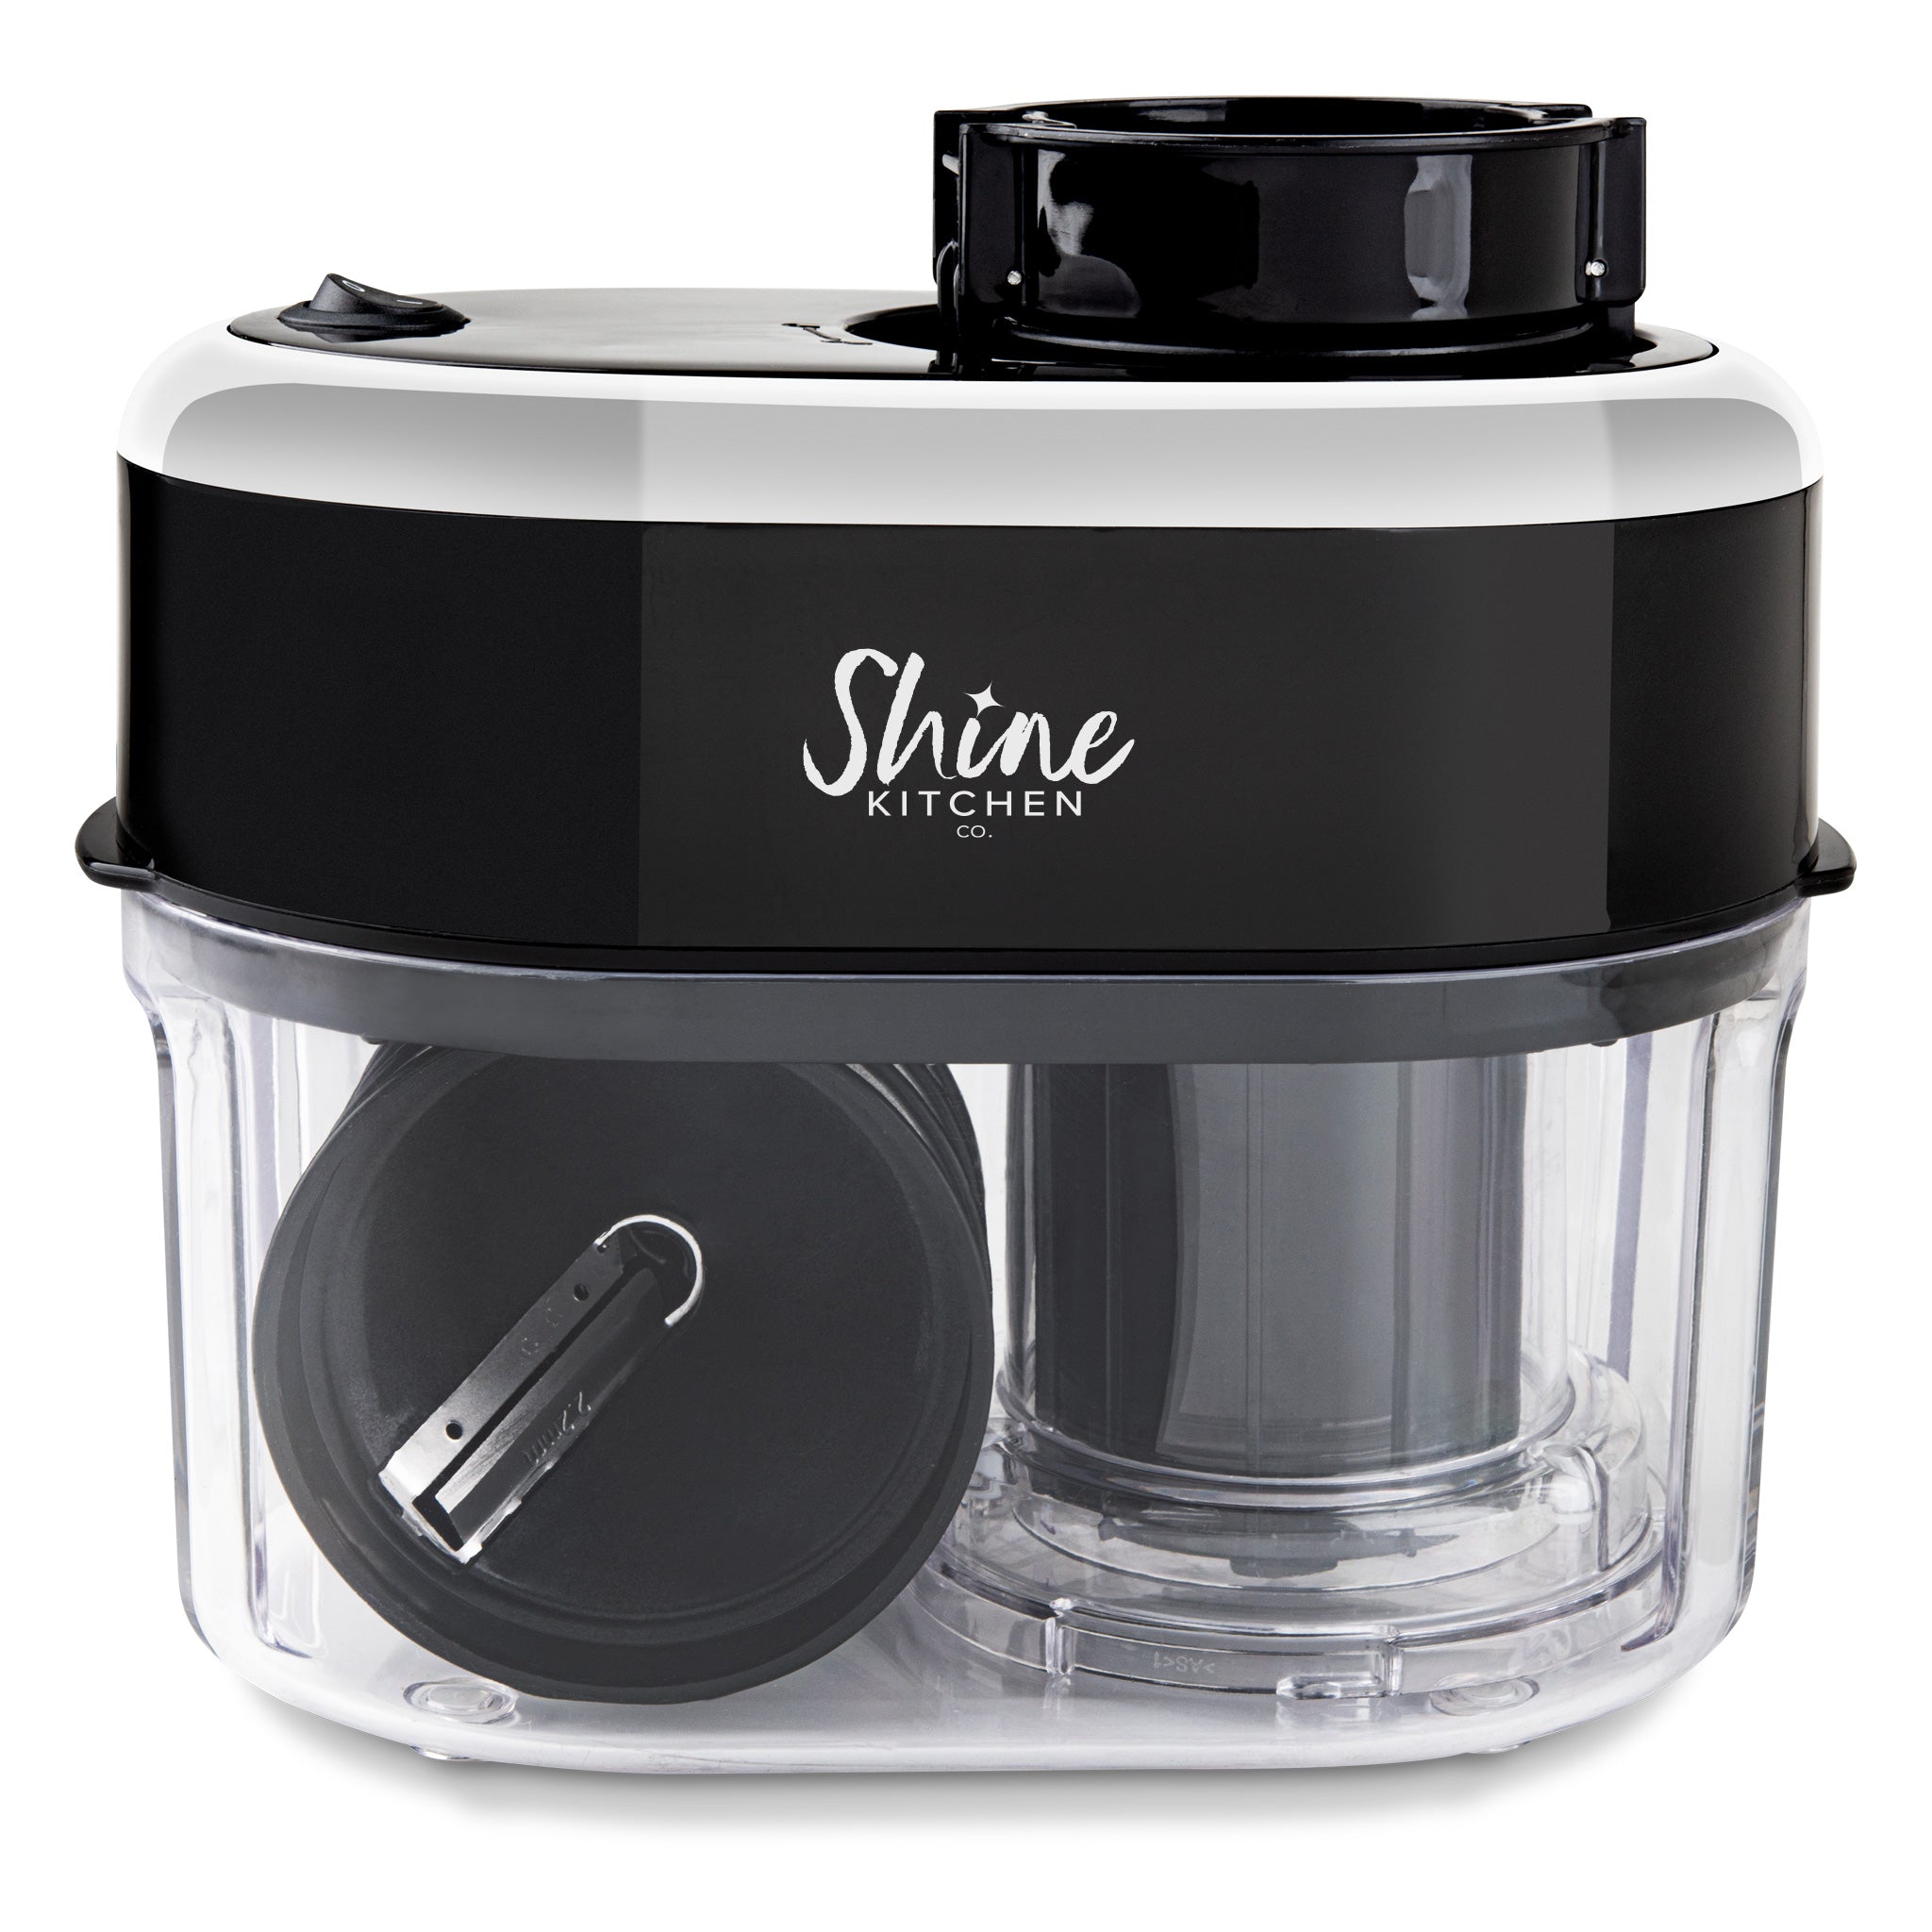 Shine Kitchen Co.® Electric Spiralizer - Compact Storage